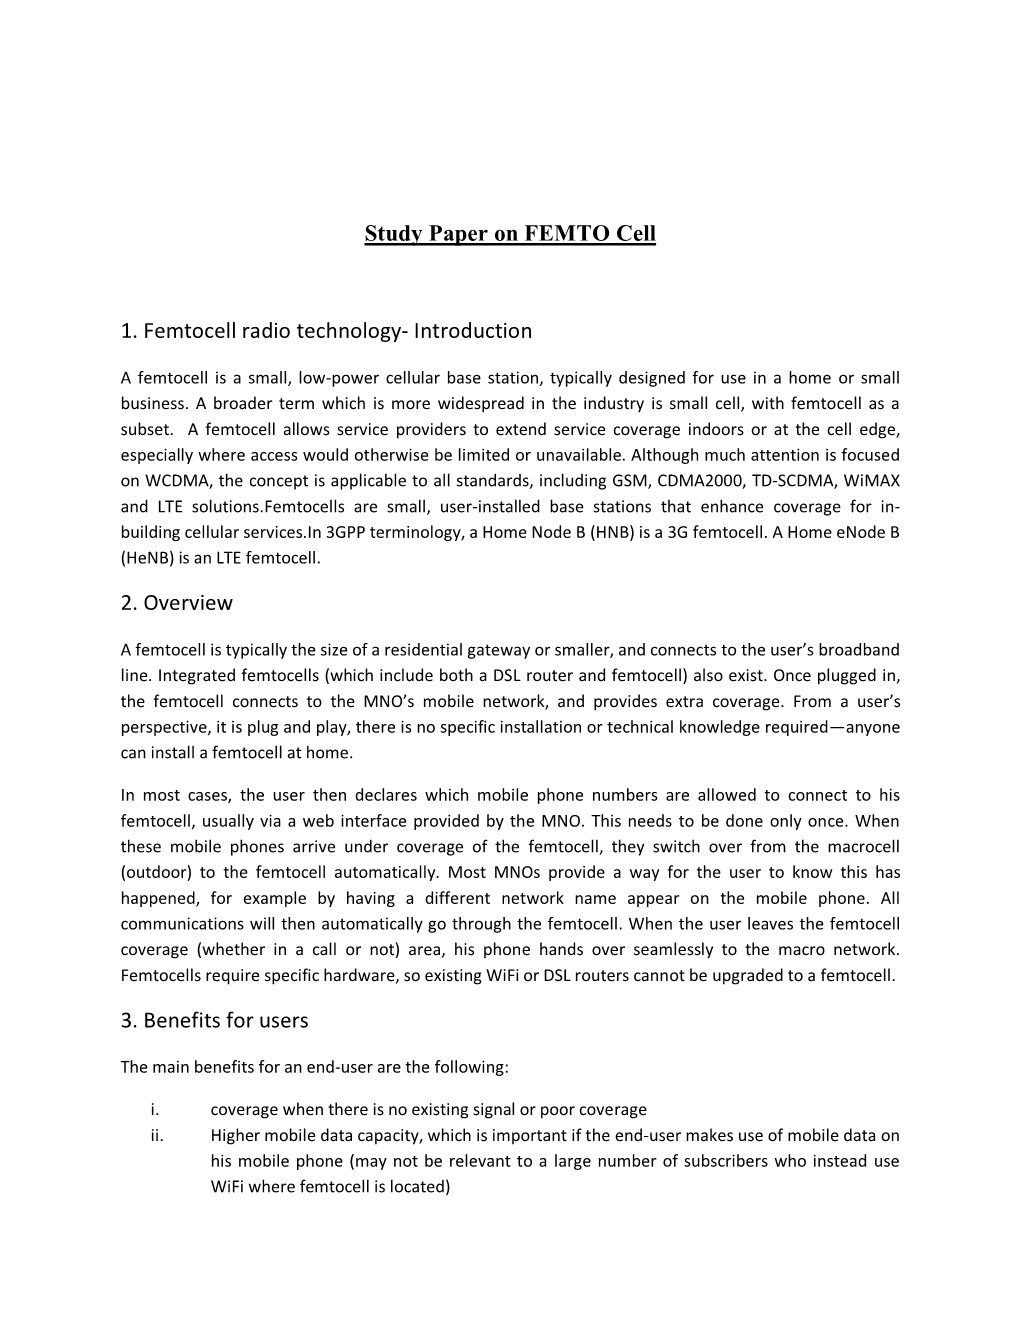 Study Paper on FEMTO Cell 1. Femtocell Radio Technology